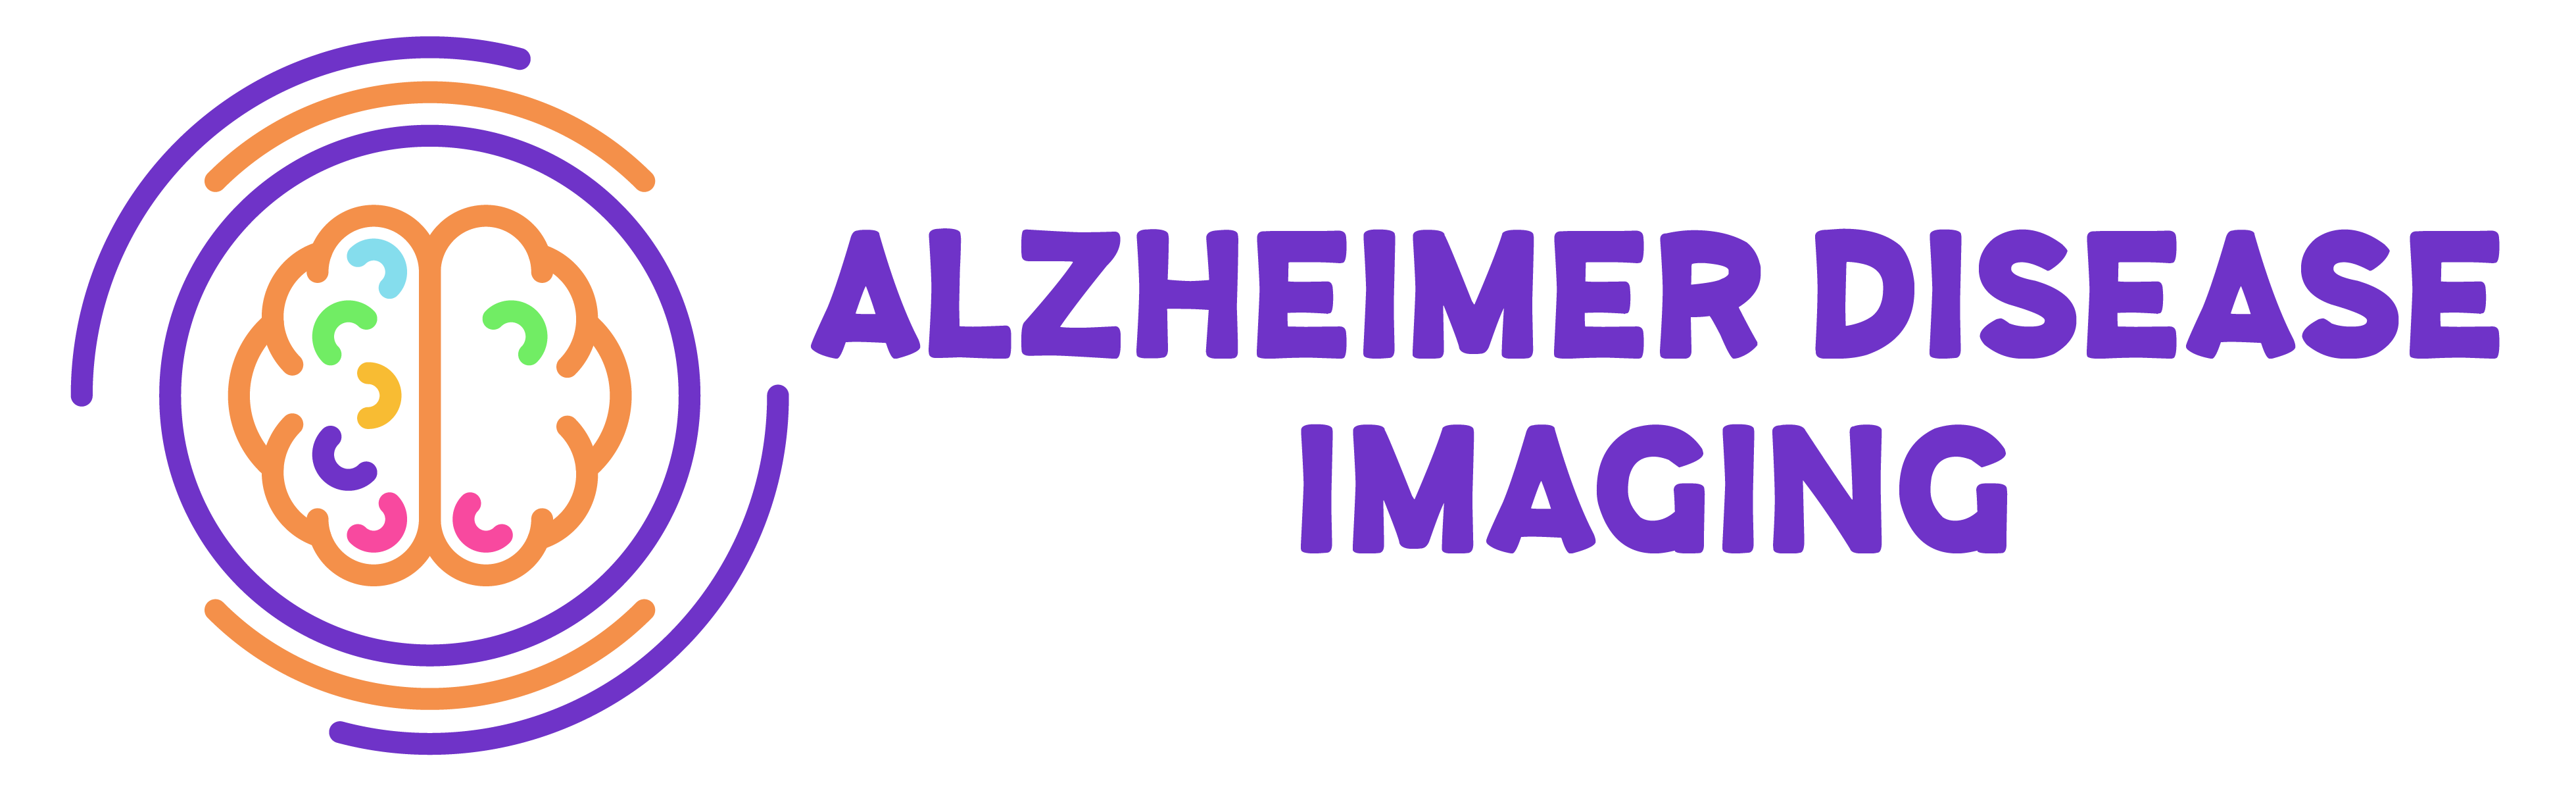 Alzheimer Disease Imaging Rochester